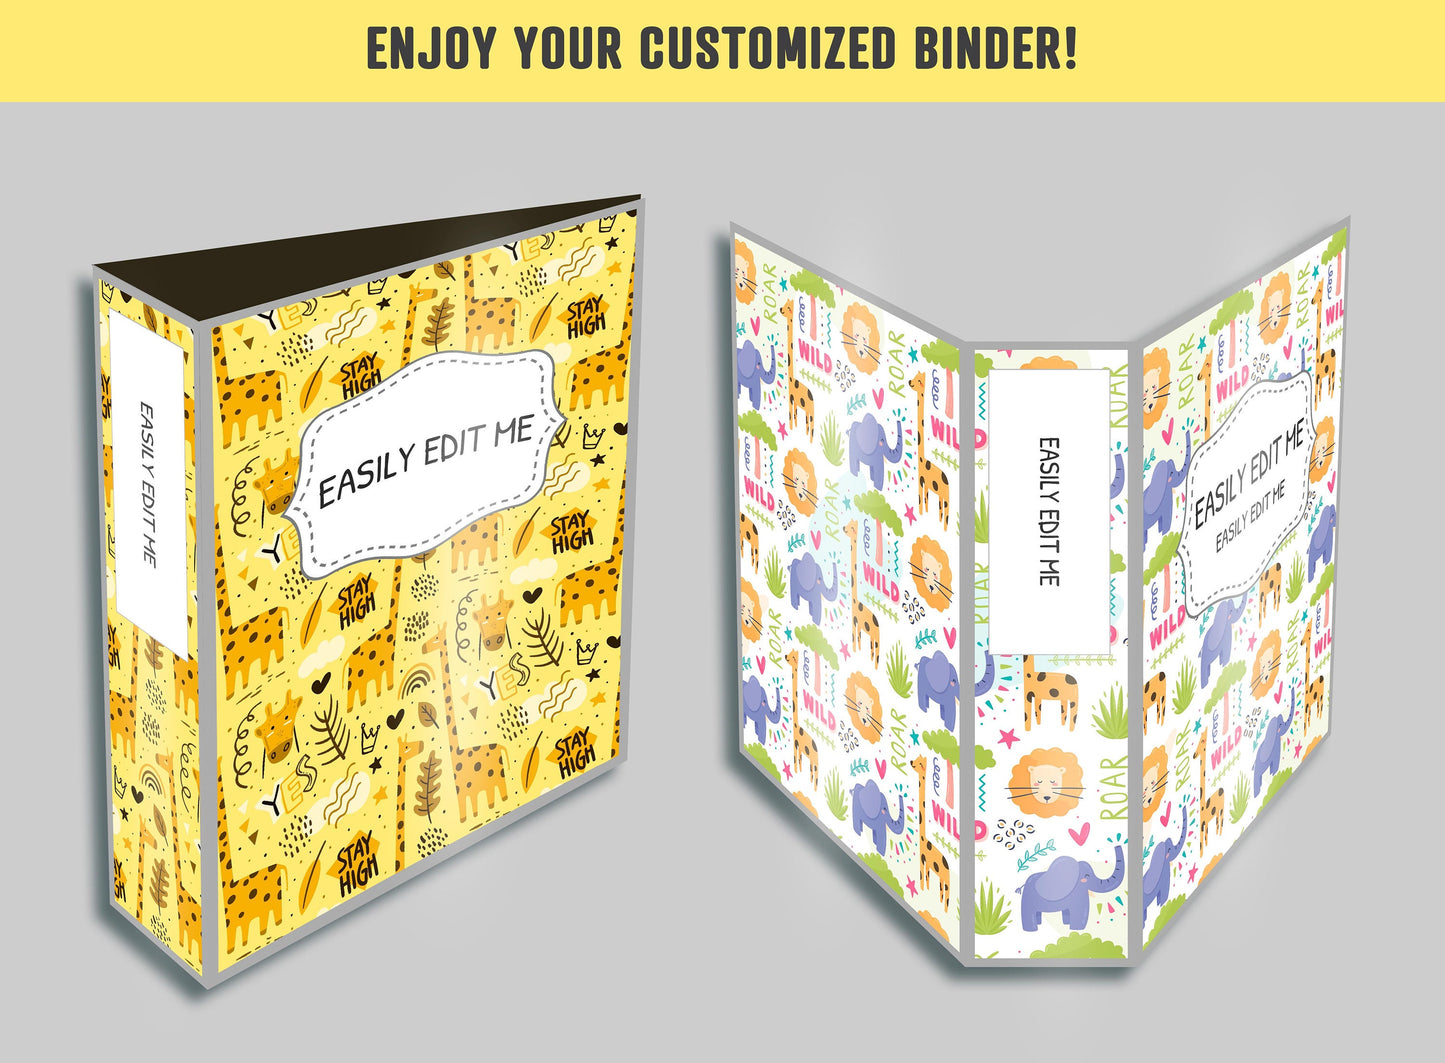 Binder Covers For School, 10 Printable & Editable Binder Covers+Spines, Binder Insert Template Teacher Planner Cover, Printable Binder Cover